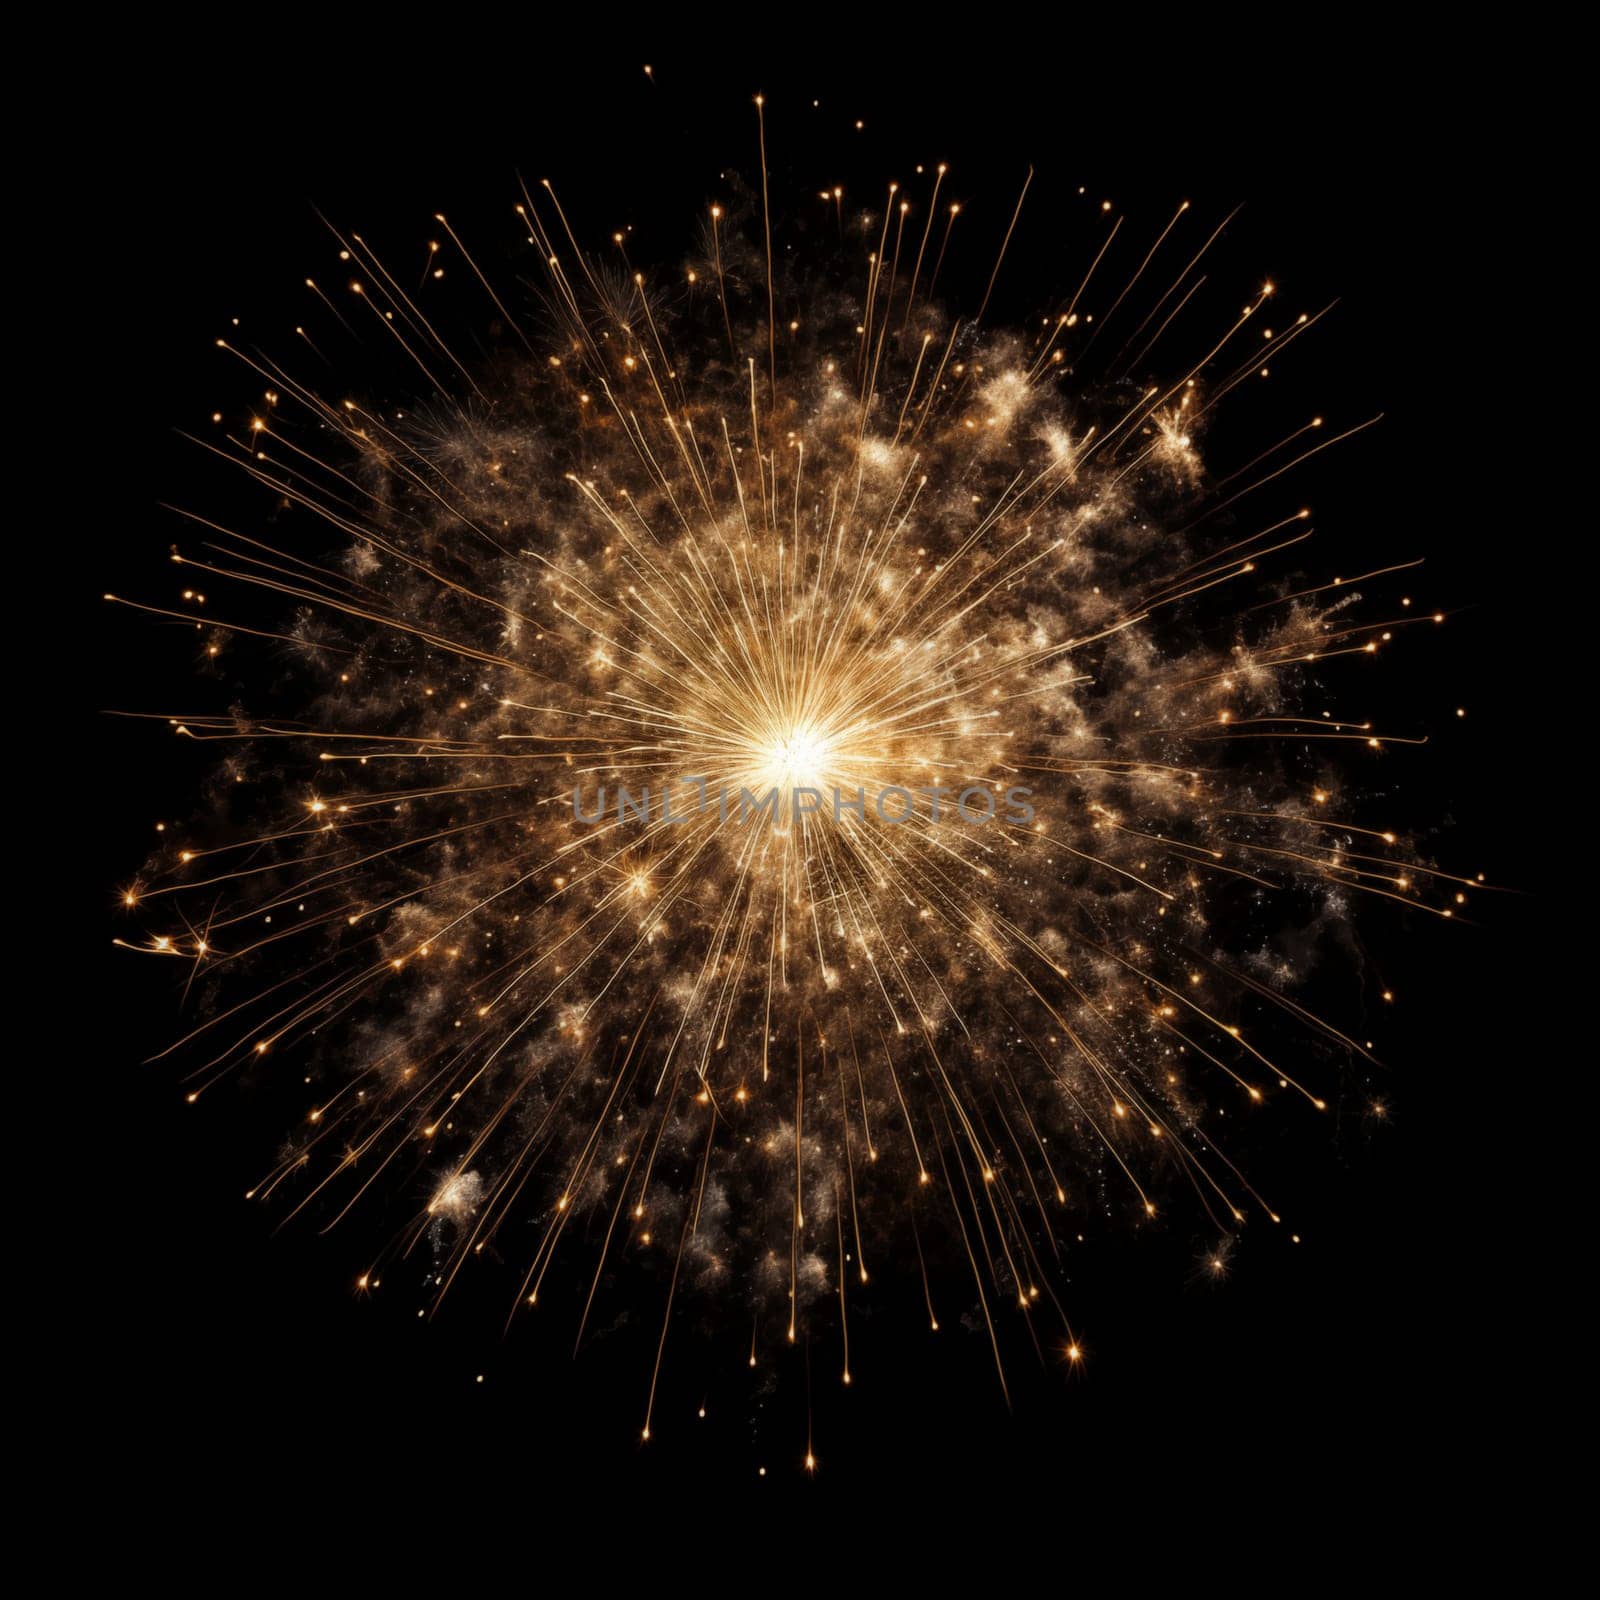 One golden fireworks on black background isolated by Zakharova